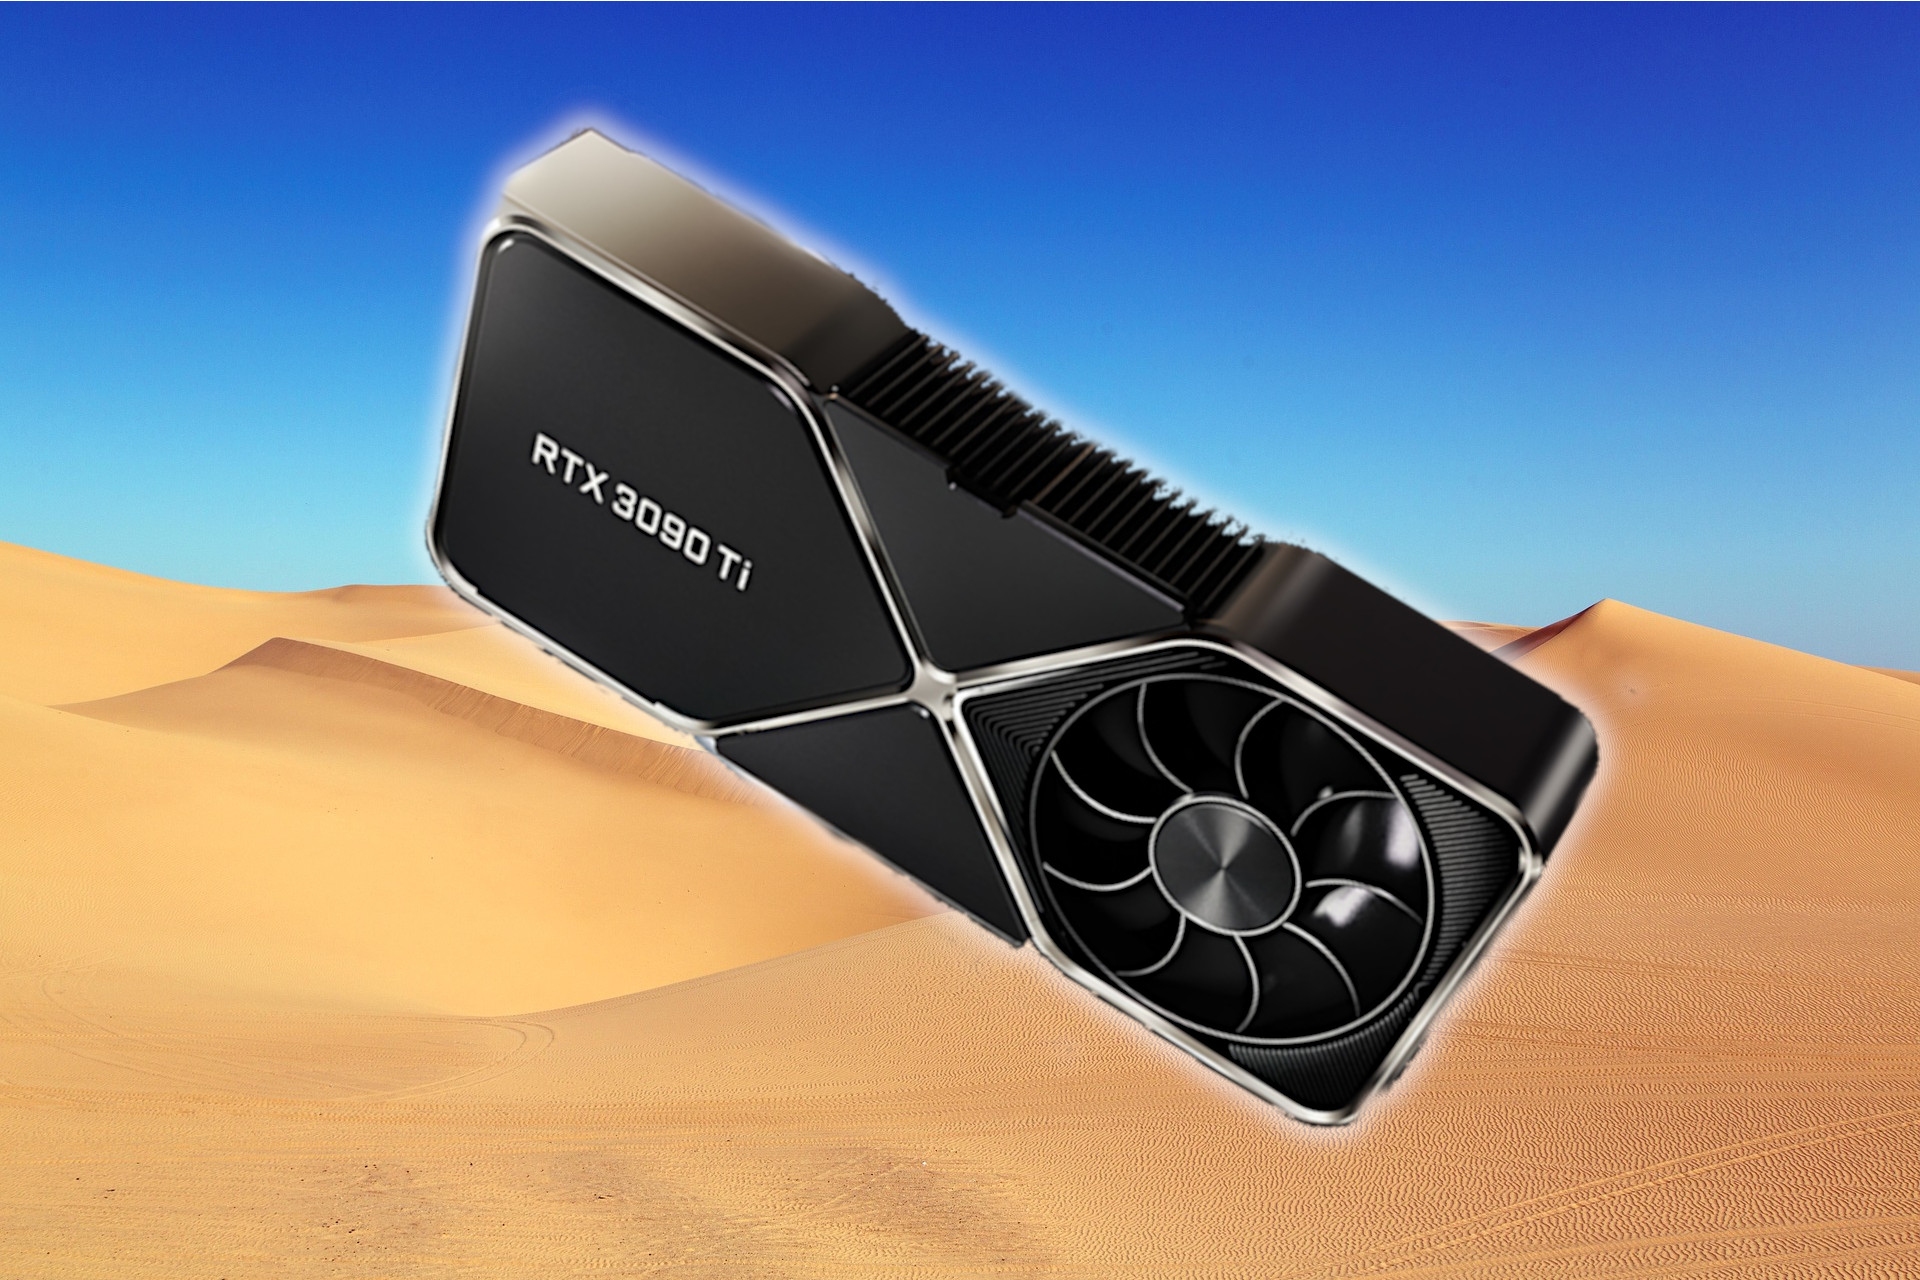 Gamer bestelt GeForce RTX 3090 Ti bij Amazon, ontvangt zand